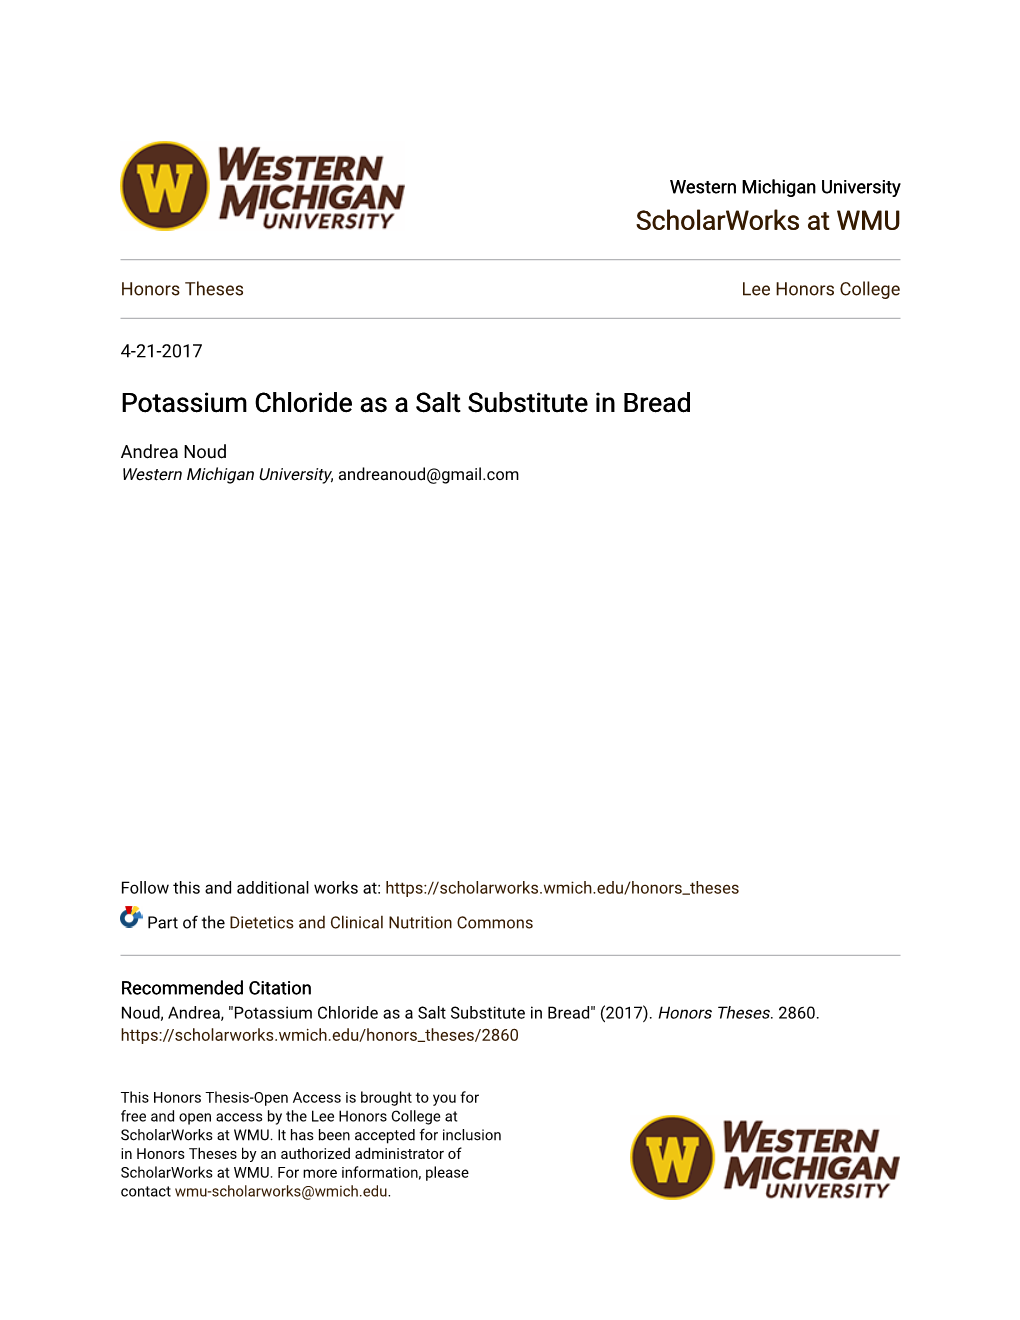 Potassium Chloride As a Salt Substitute in Bread